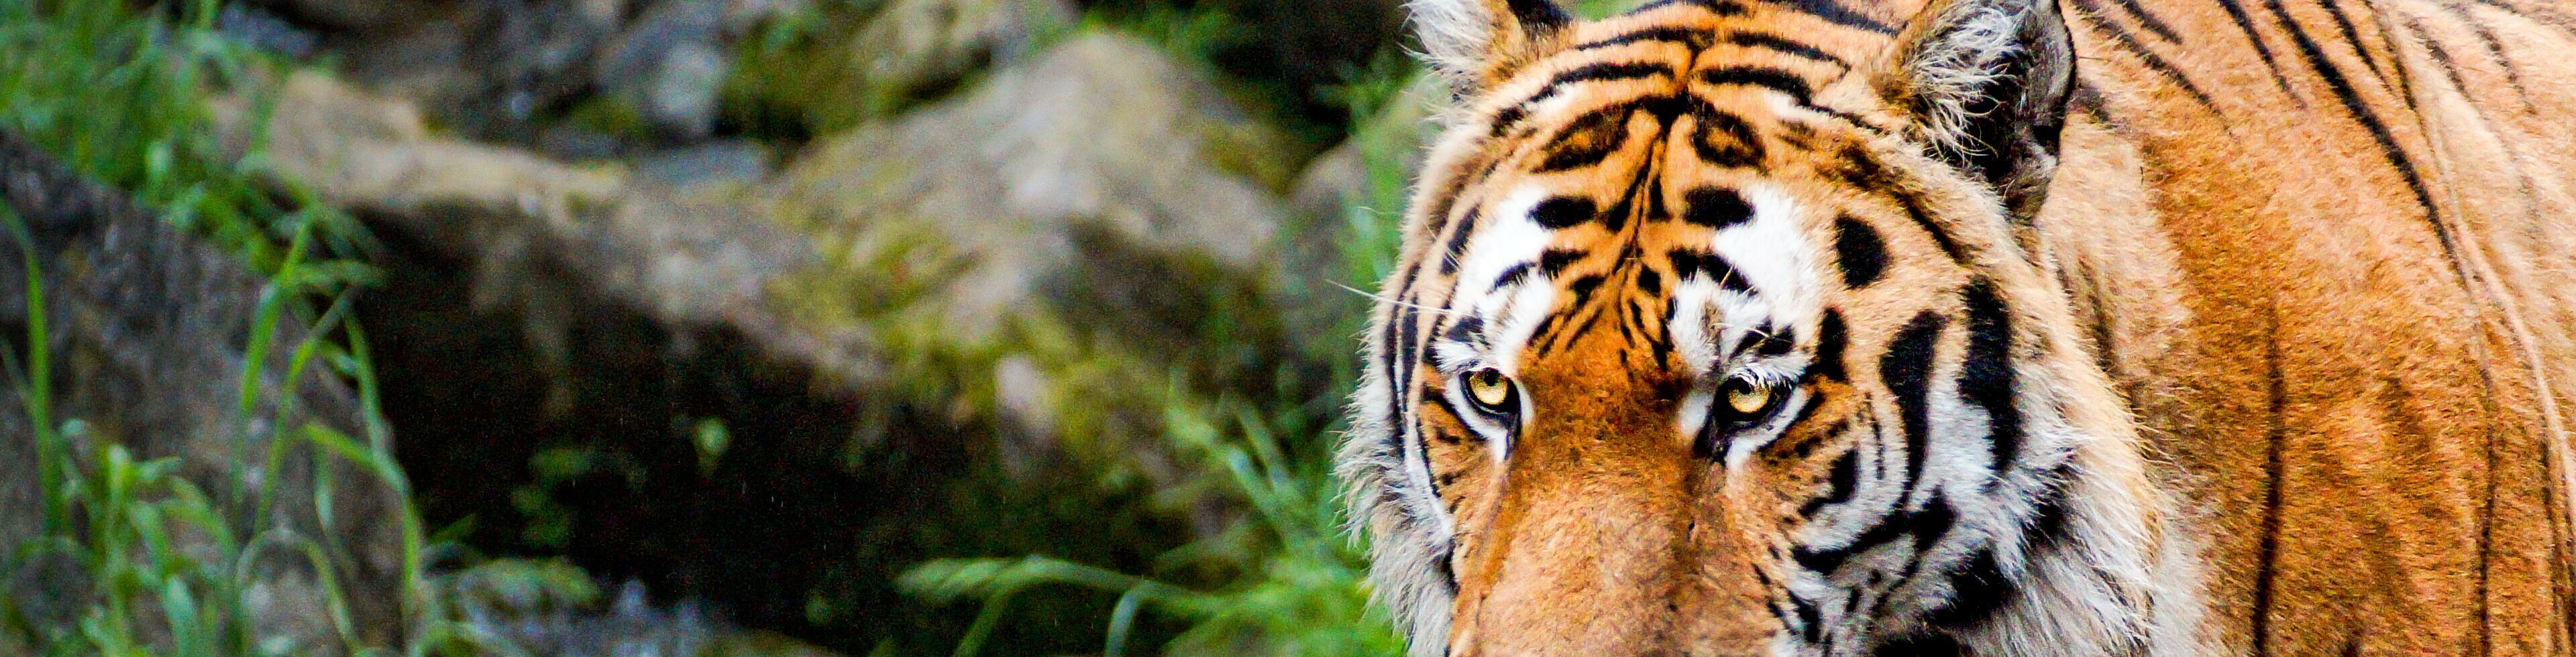 Zoo_Tiger